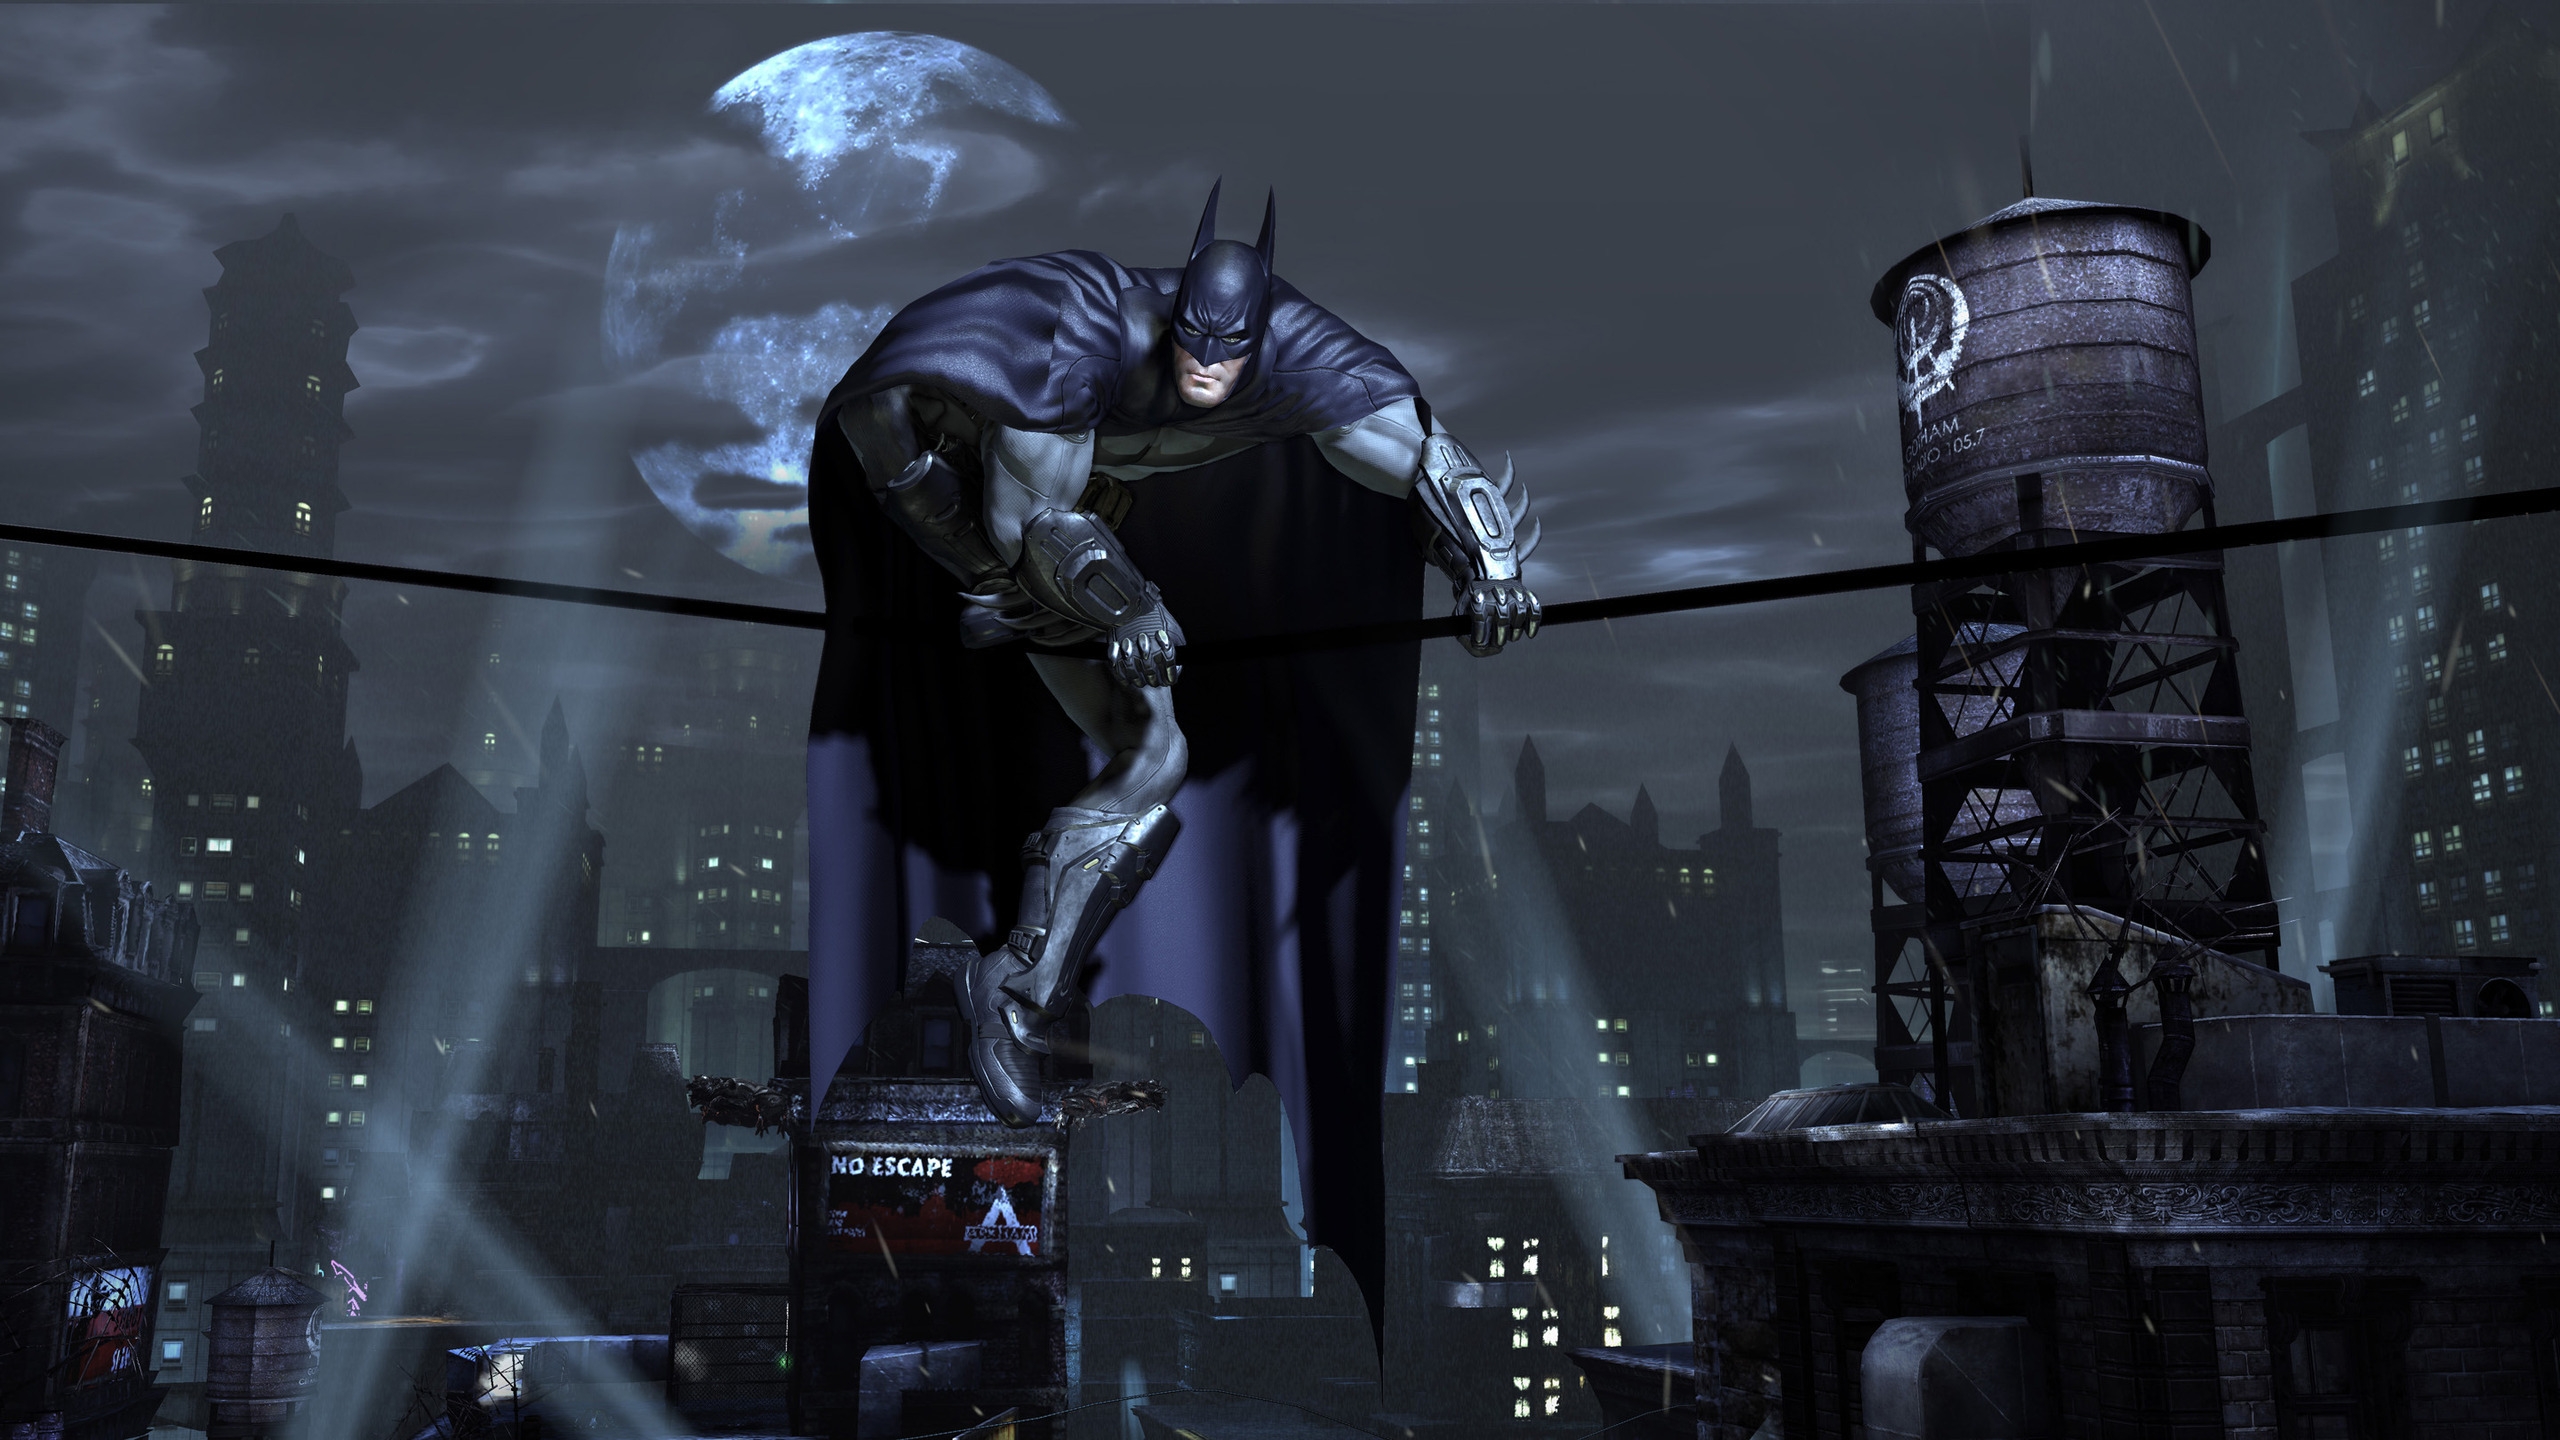 Batman Alone for 2560x1440 HDTV resolution